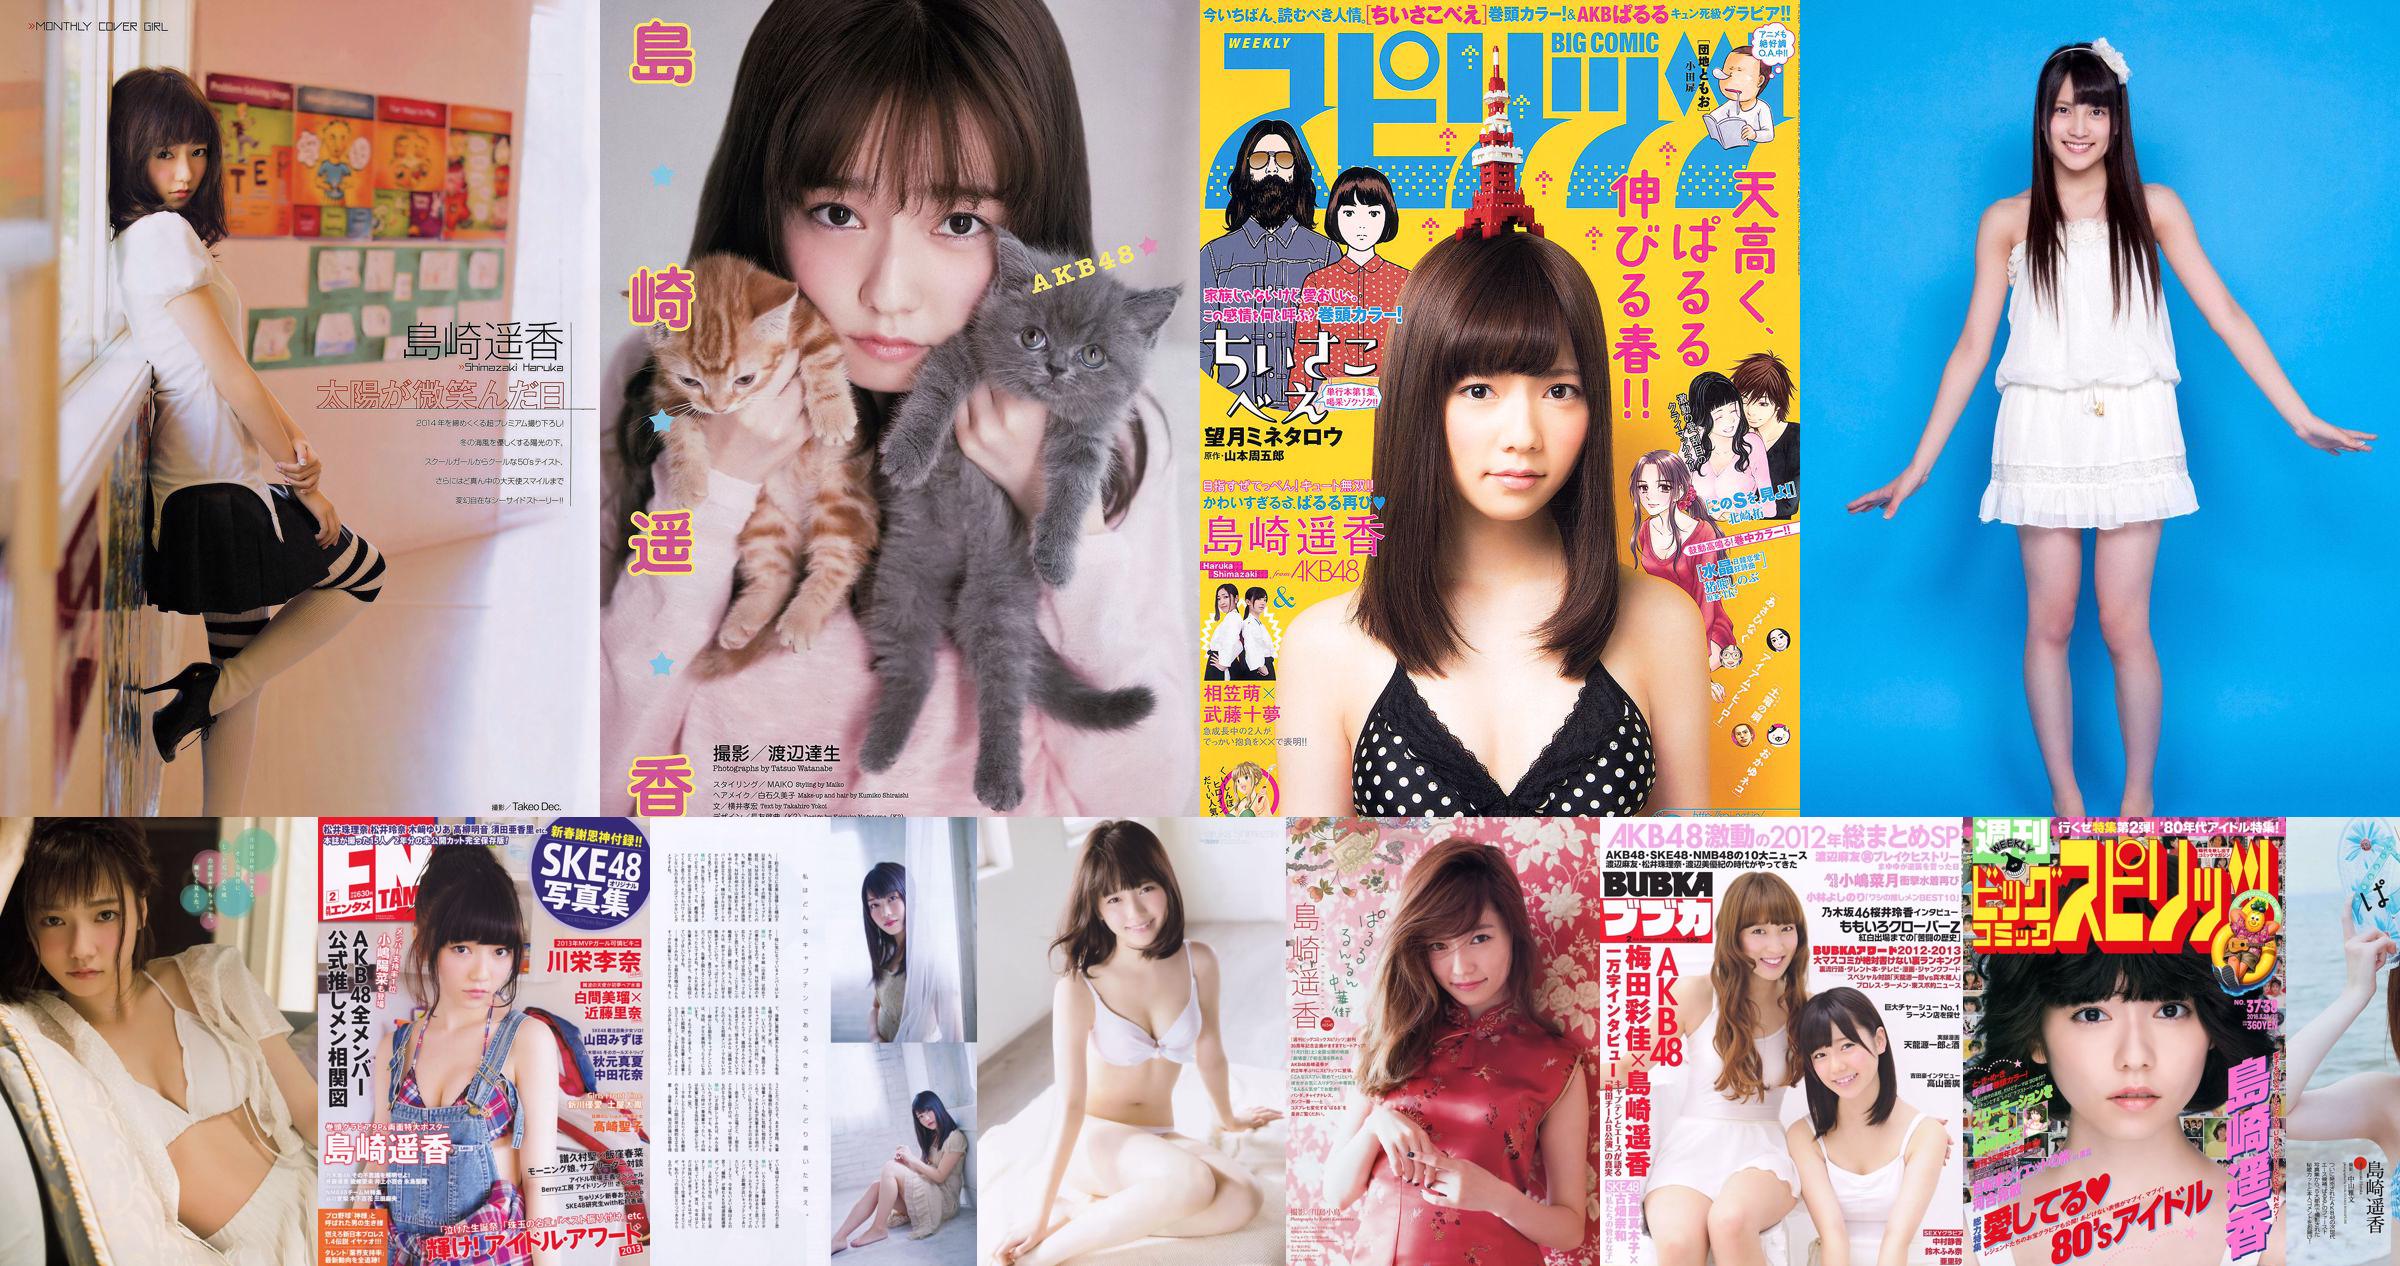 [Revista Young] Haruka Shimazaki 2014 Fotografia No.51 No.ecd797 Página 2